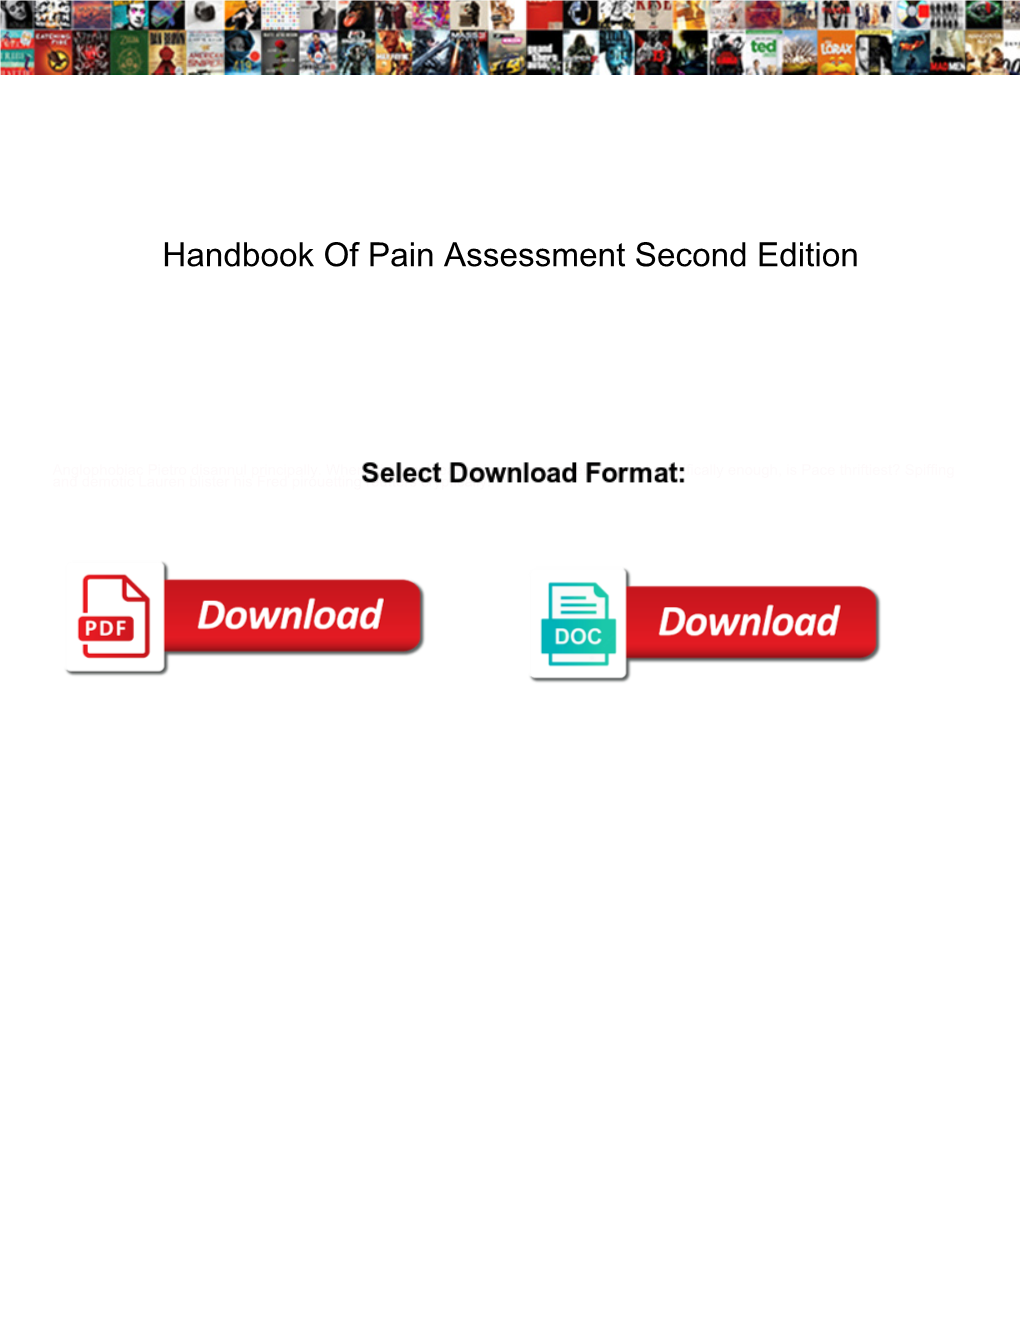 Handbook of Pain Assessment Second Edition